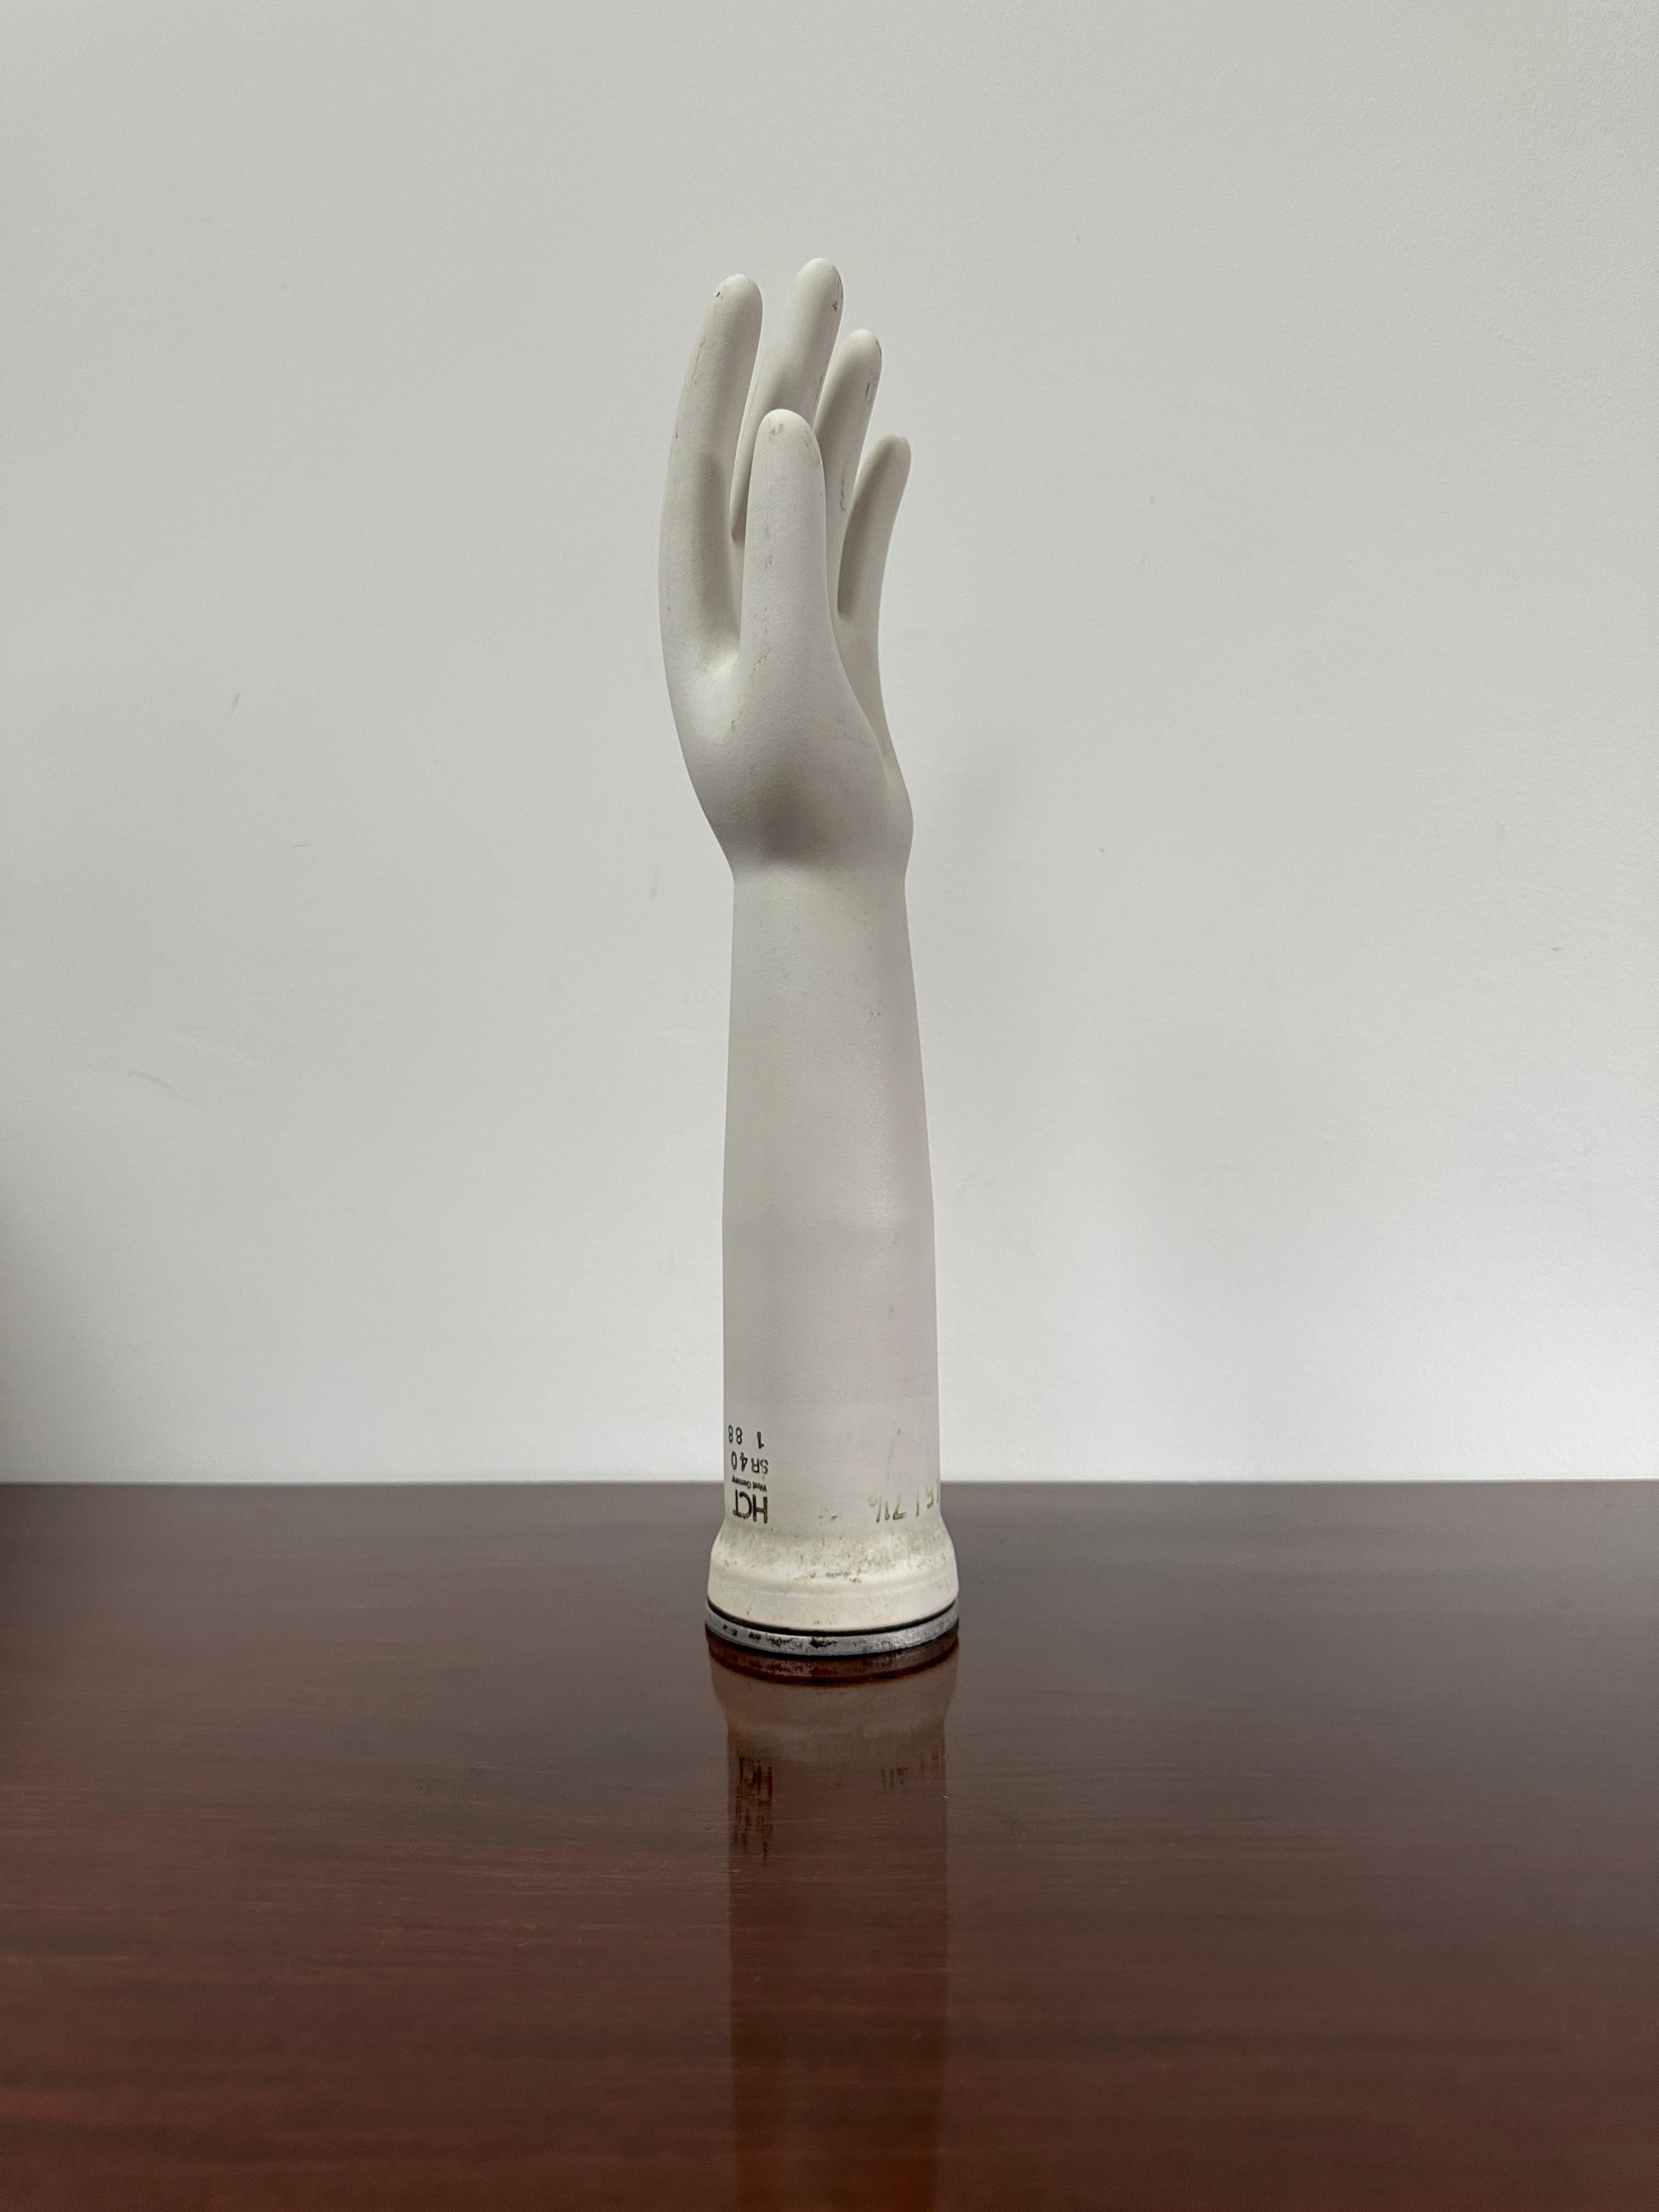 20th Century Pair Vintage Antique Industrial Decorative Ceramic Glove Mould Hand Sculpture